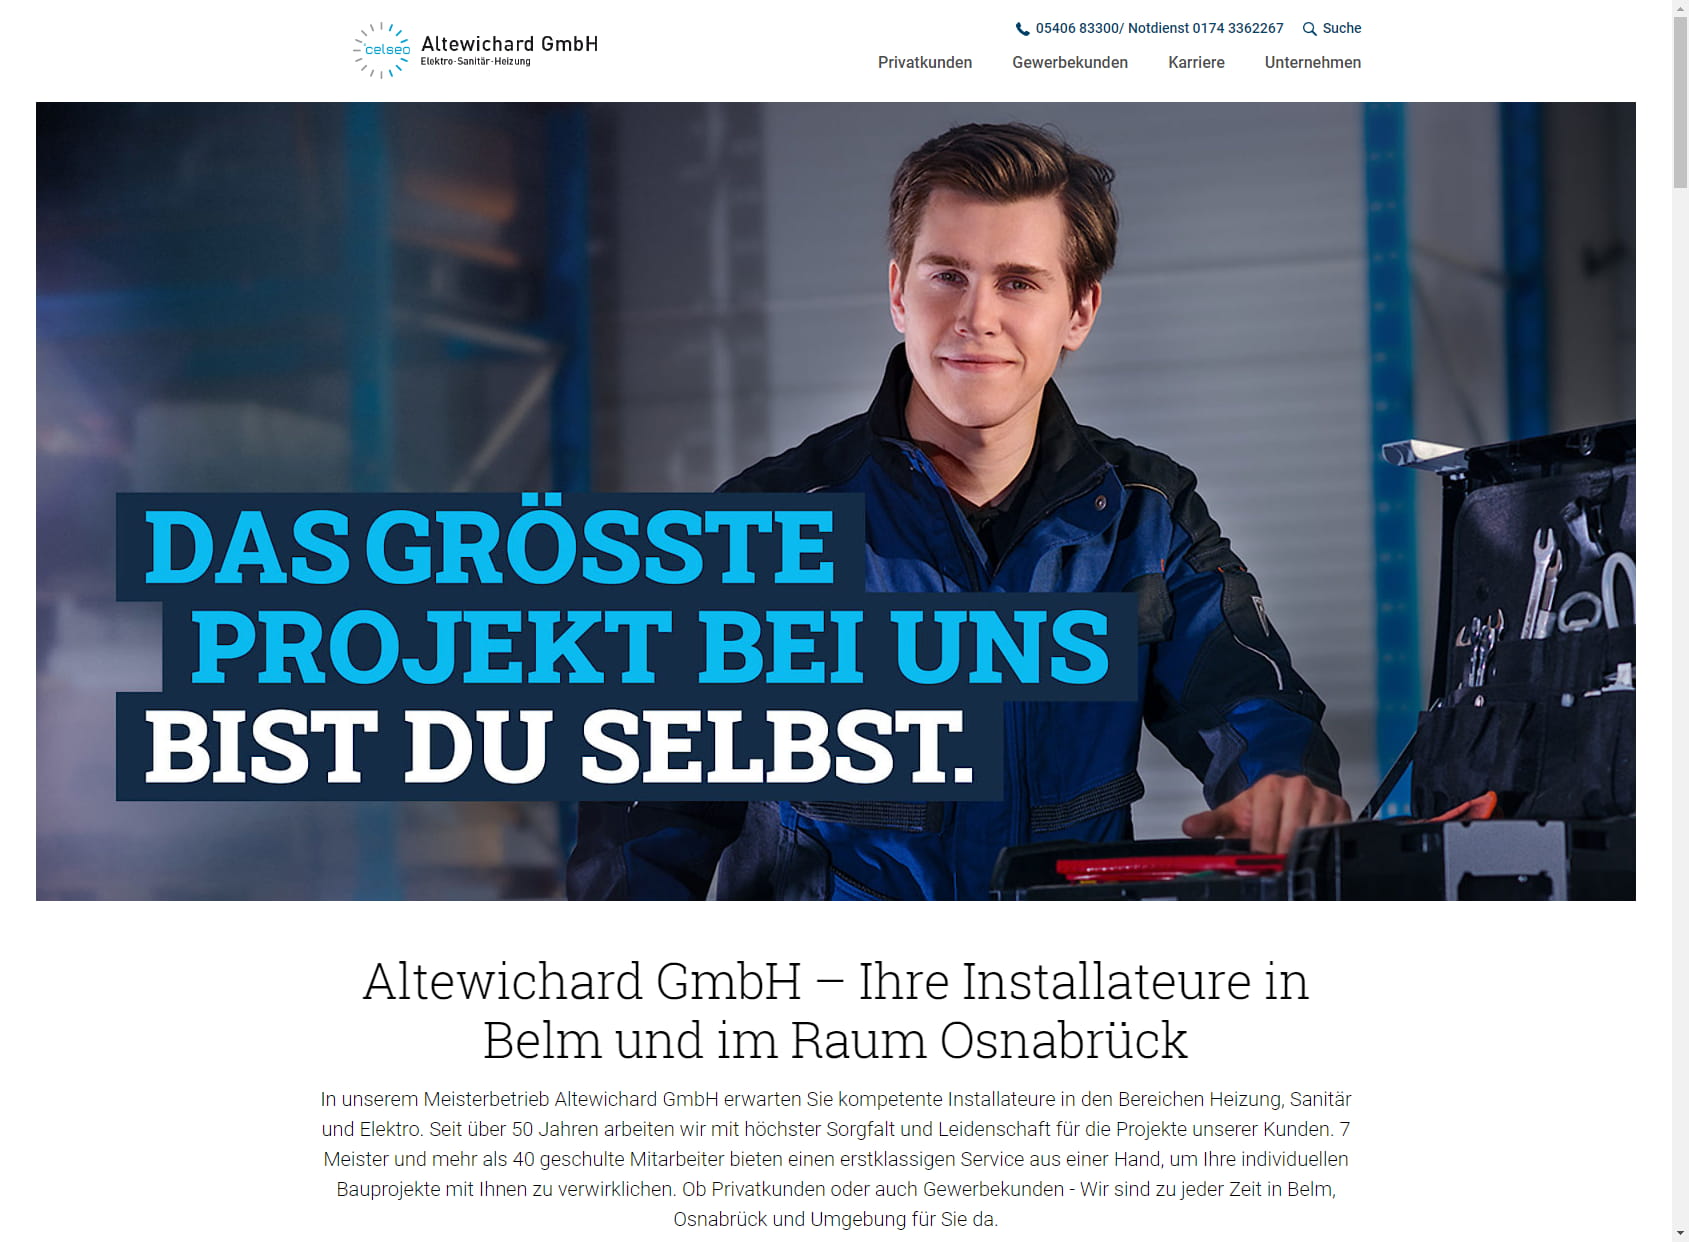 Altewichard GmbH